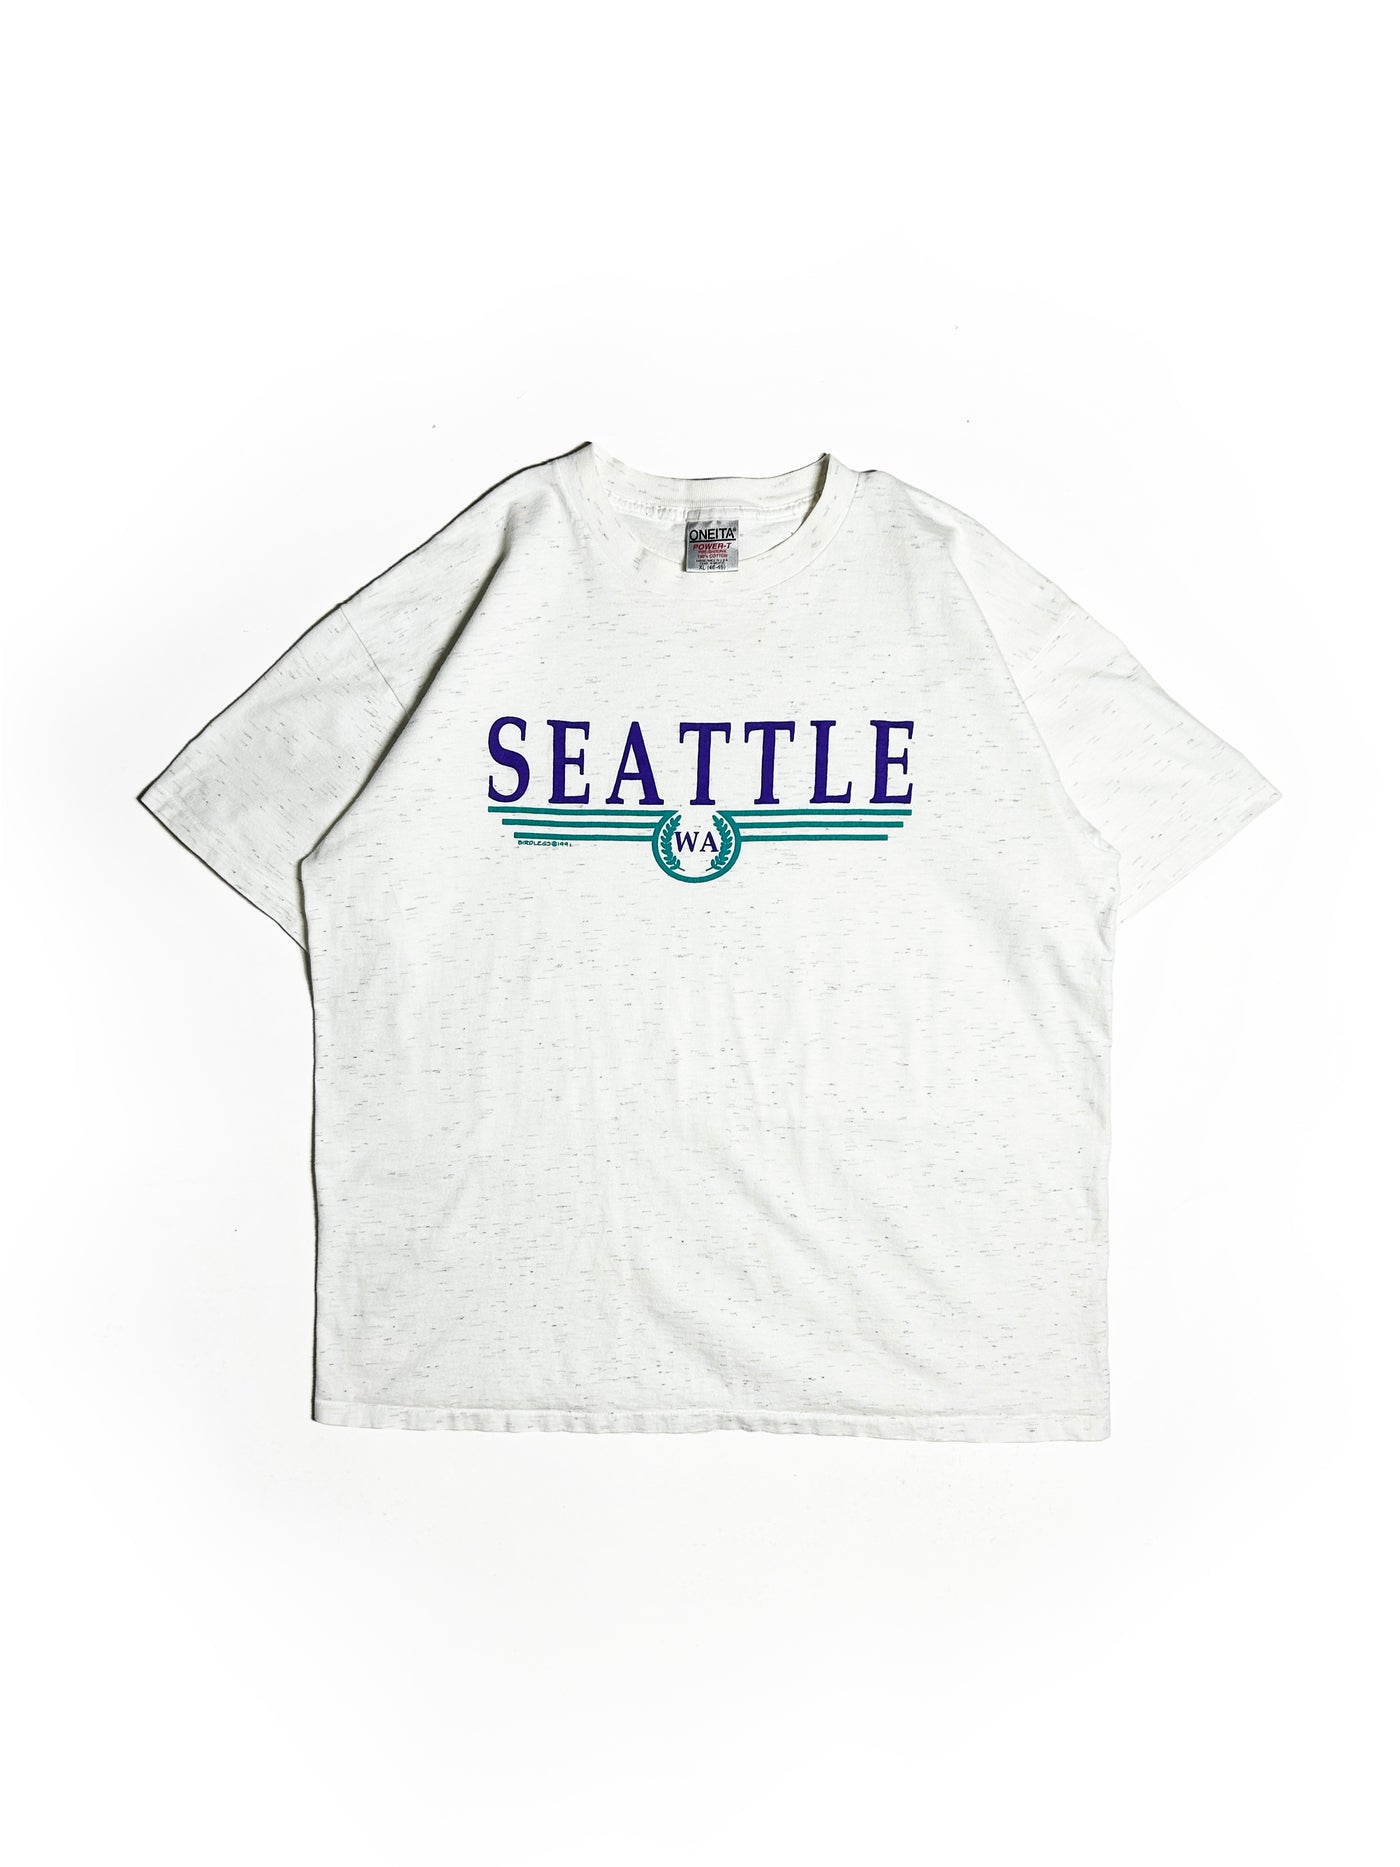 Vintage 1991 Seattle T-Shirt